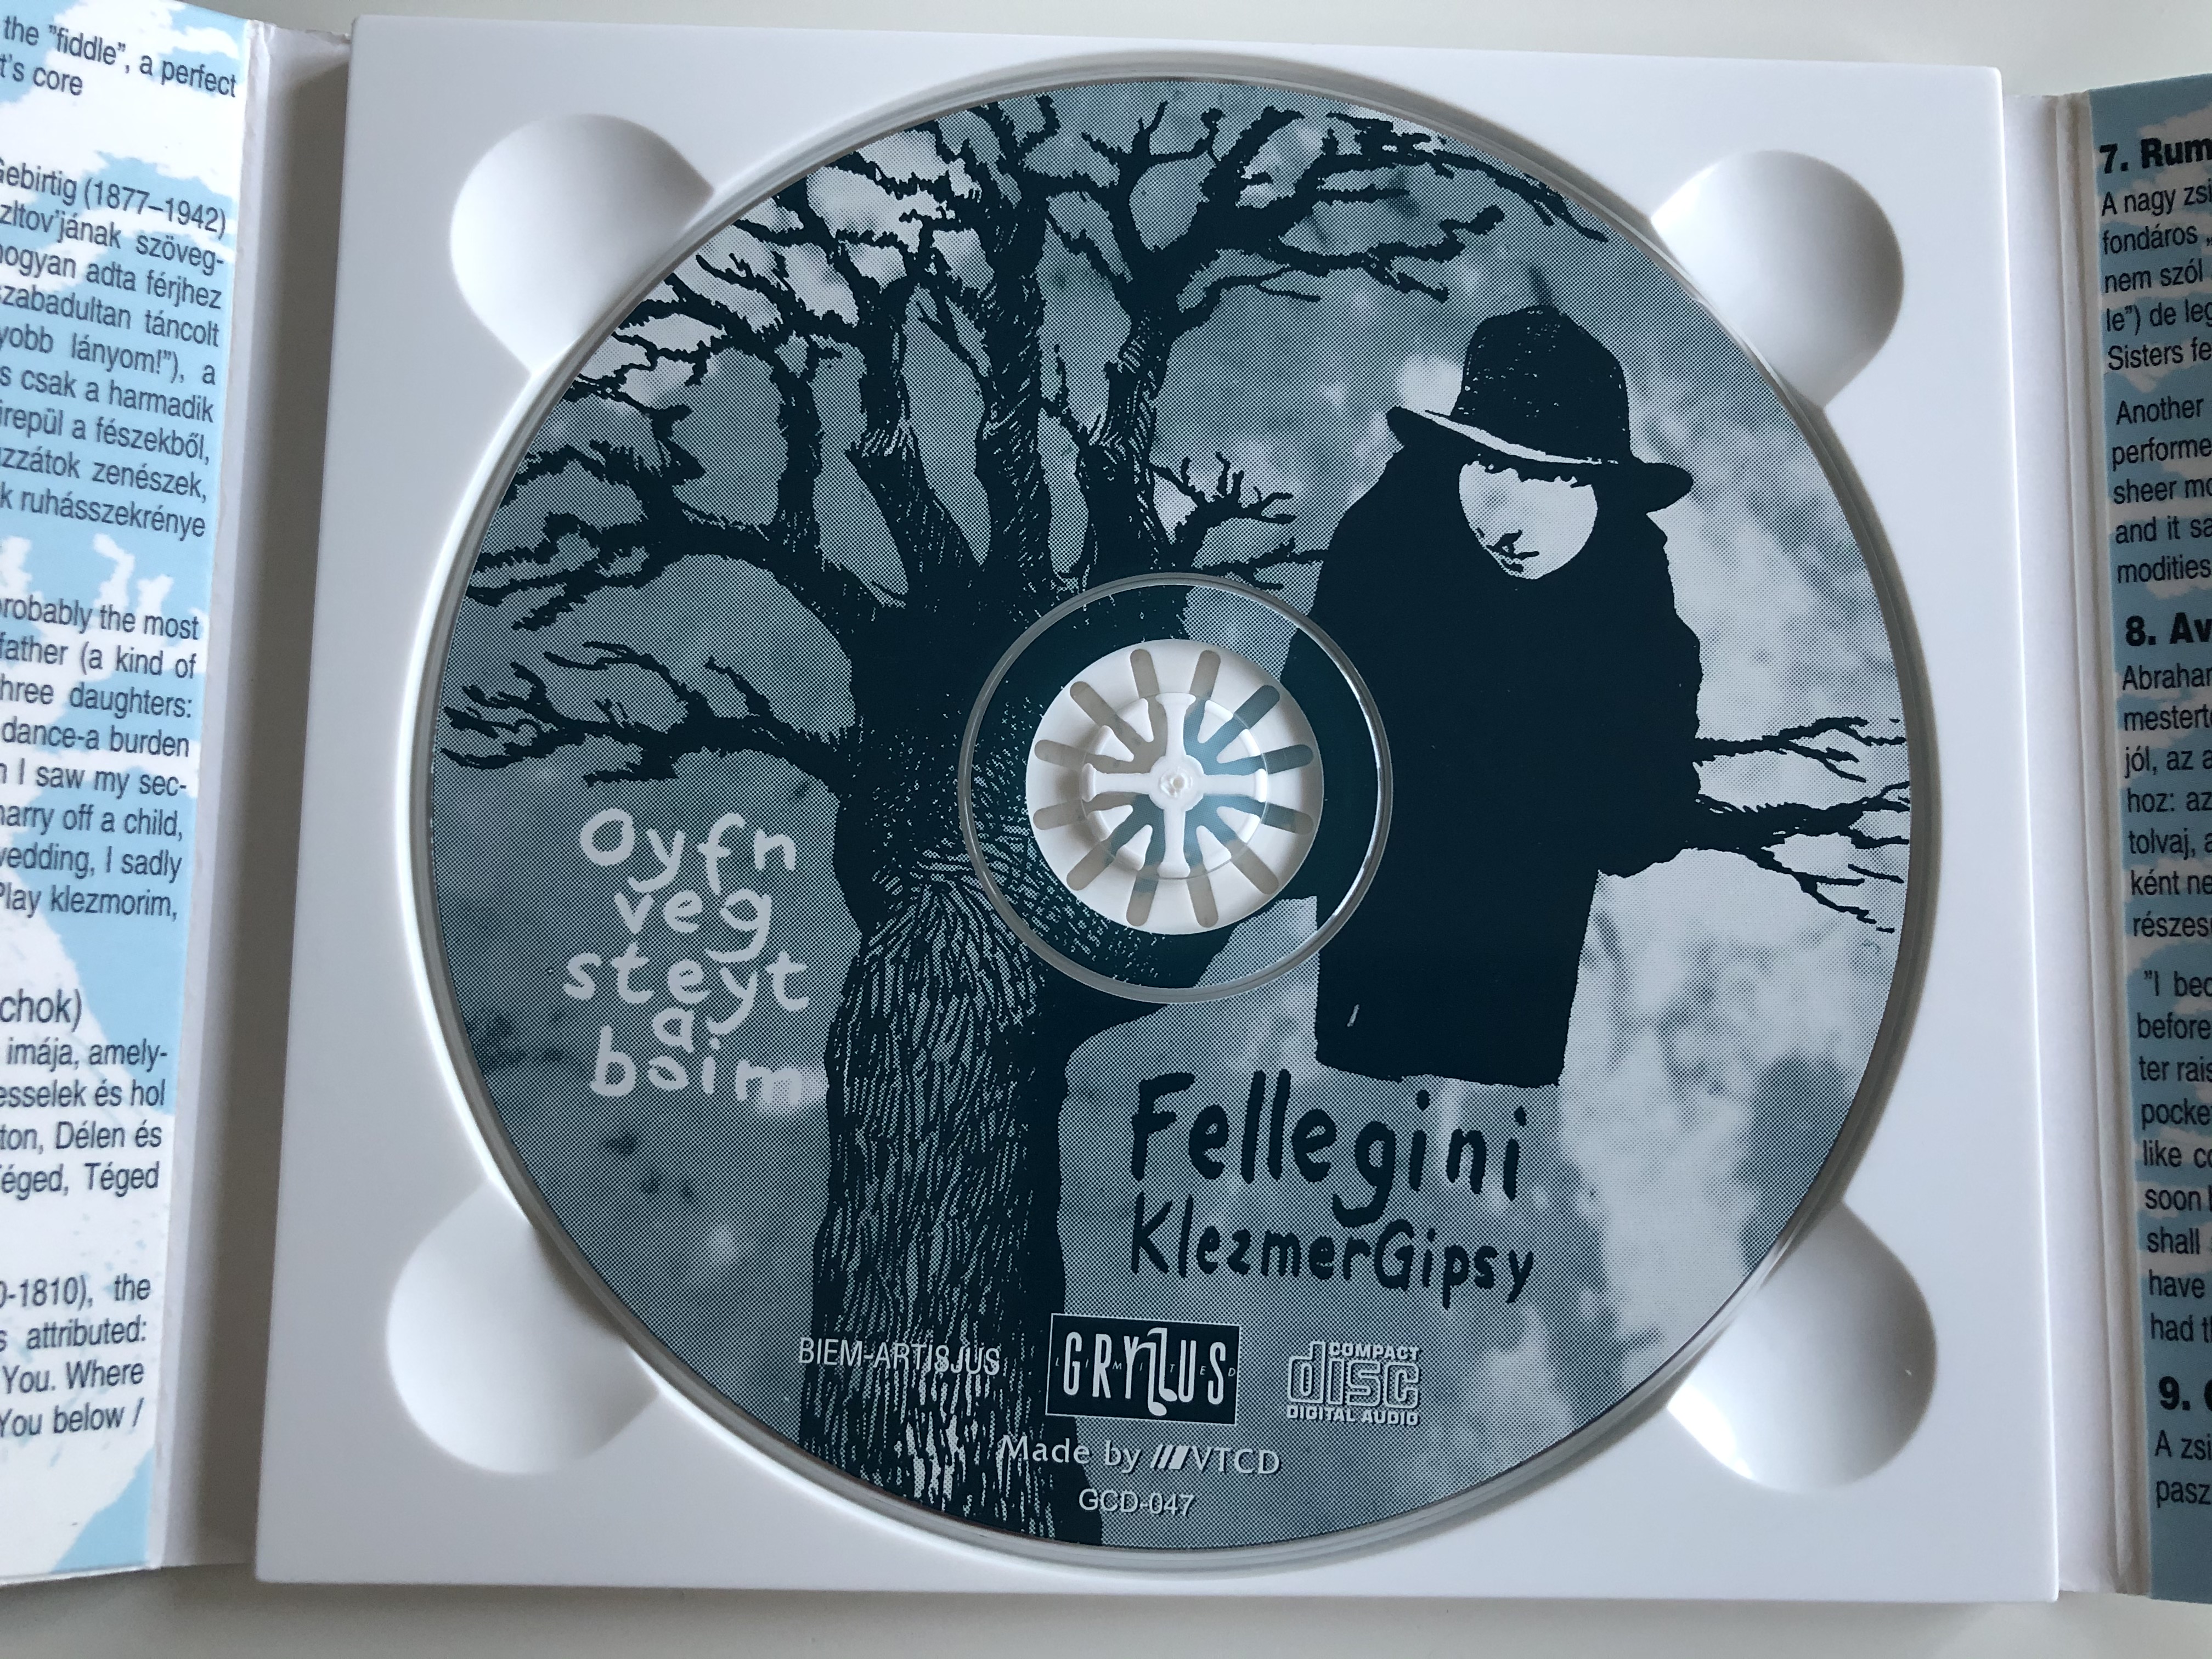 fellegini-klezmer-gipsy-oyfn-veg-steyt-a-boim-gryllus-audio-cd-2005-gcd-047-4-.jpg